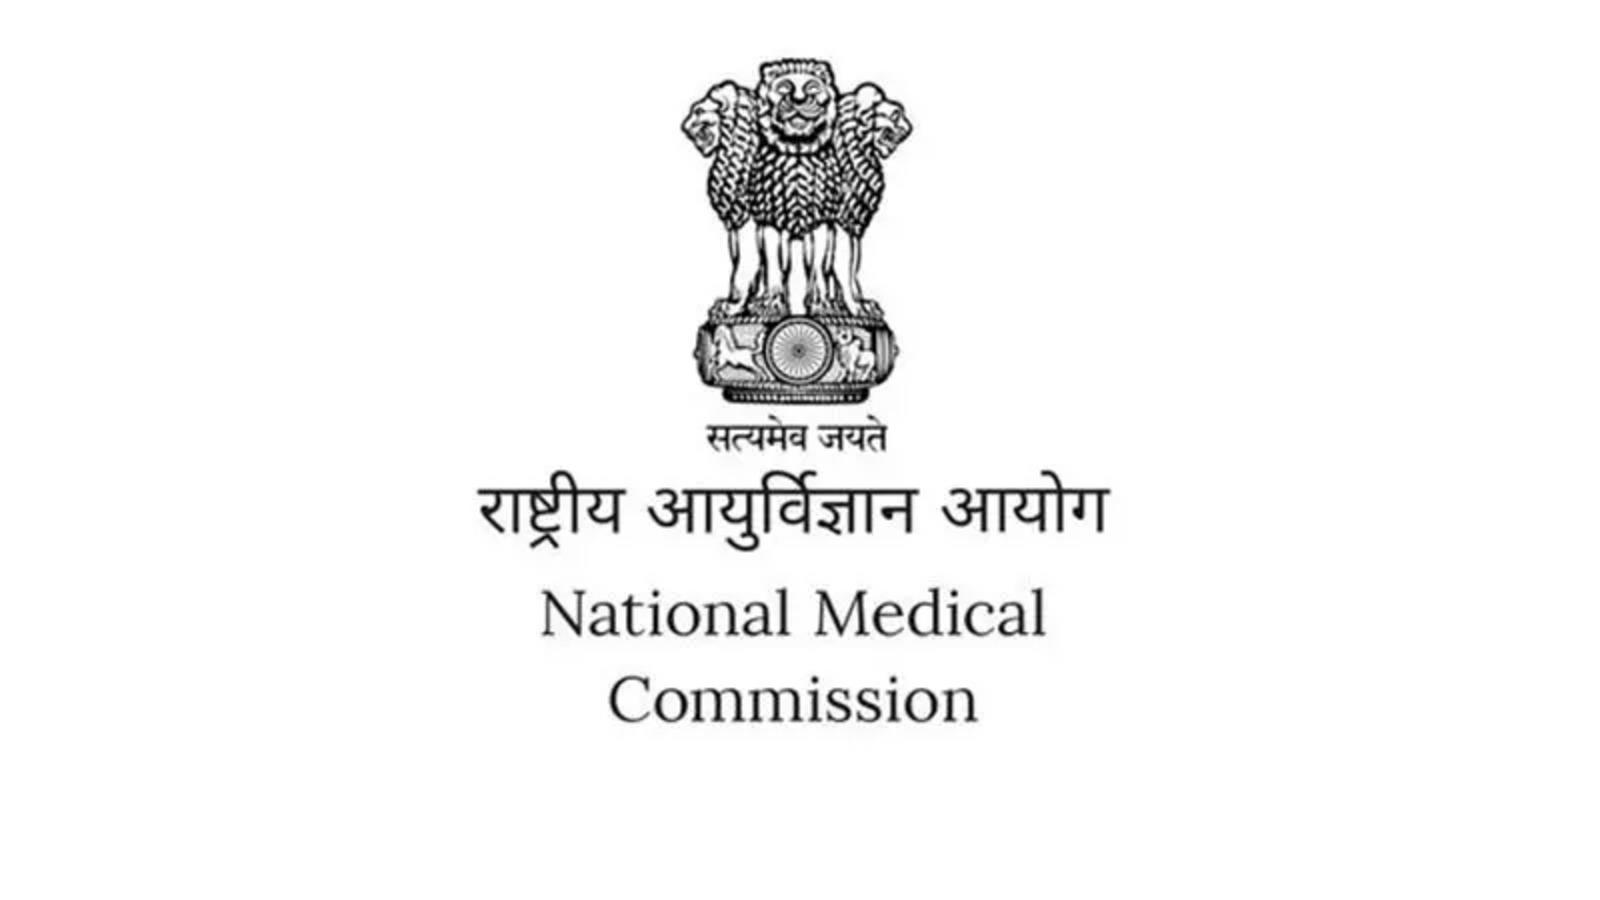 IMA objects to NMC logo depicting Hindu deity, demands religion-neutrality  | India News - Business Standard